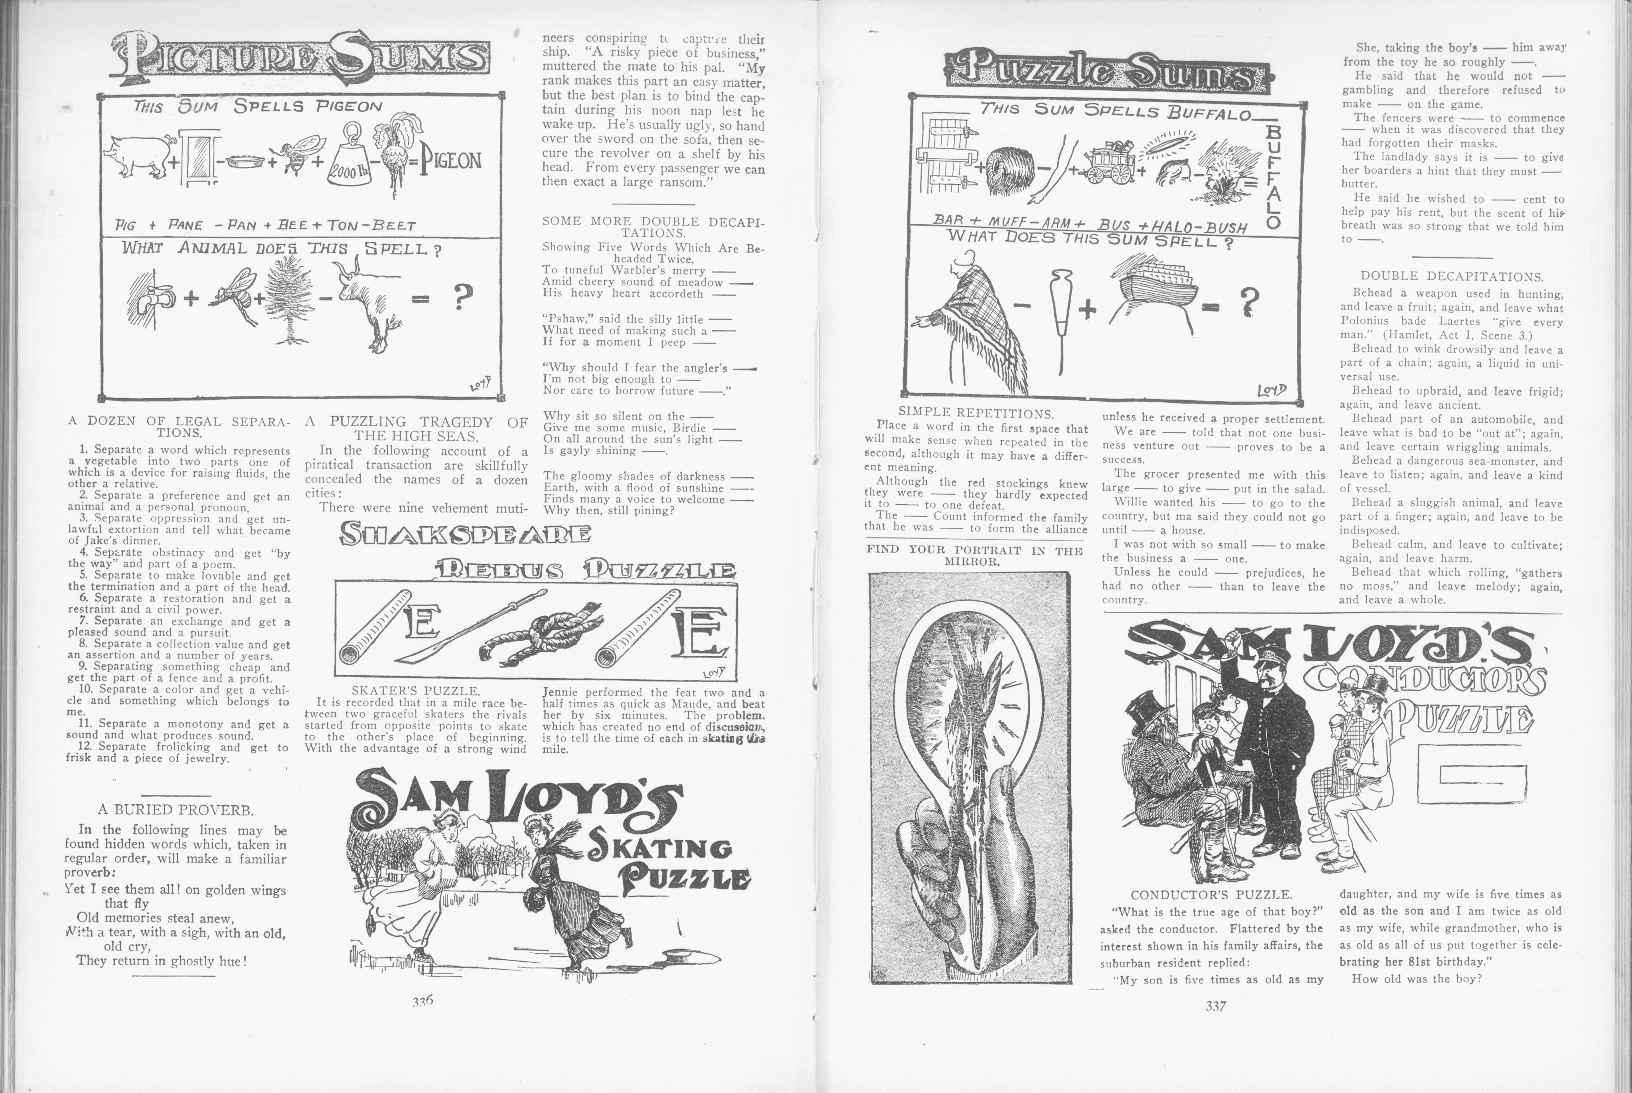 Sam Loyd - Cyclopedia of Puzzles - page 336-337